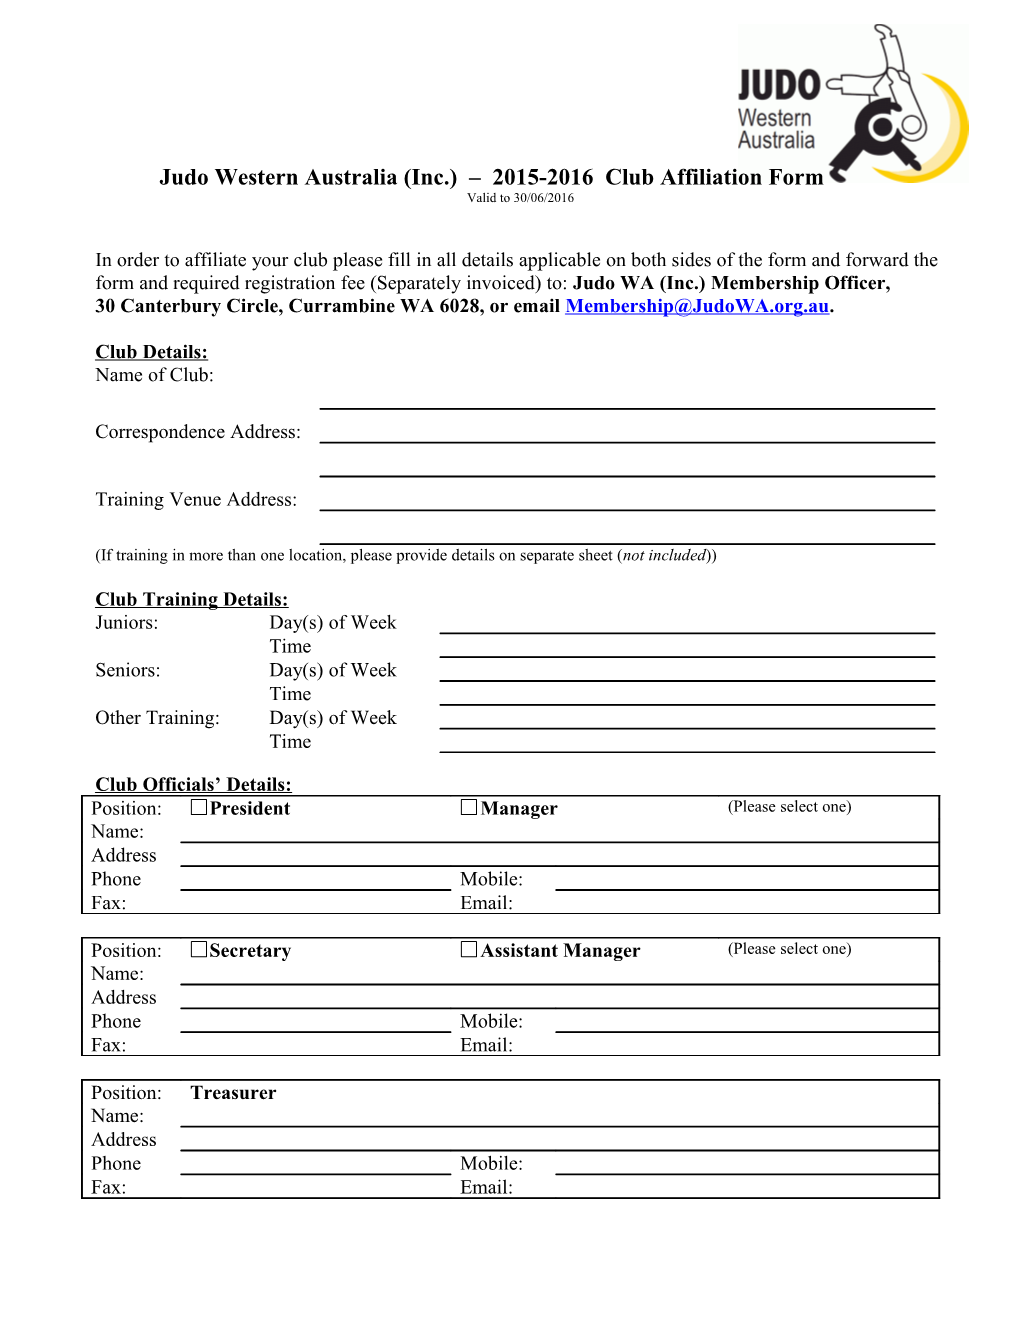 Judo Western Australia (Inc) - Club Membership Form 2008-2009